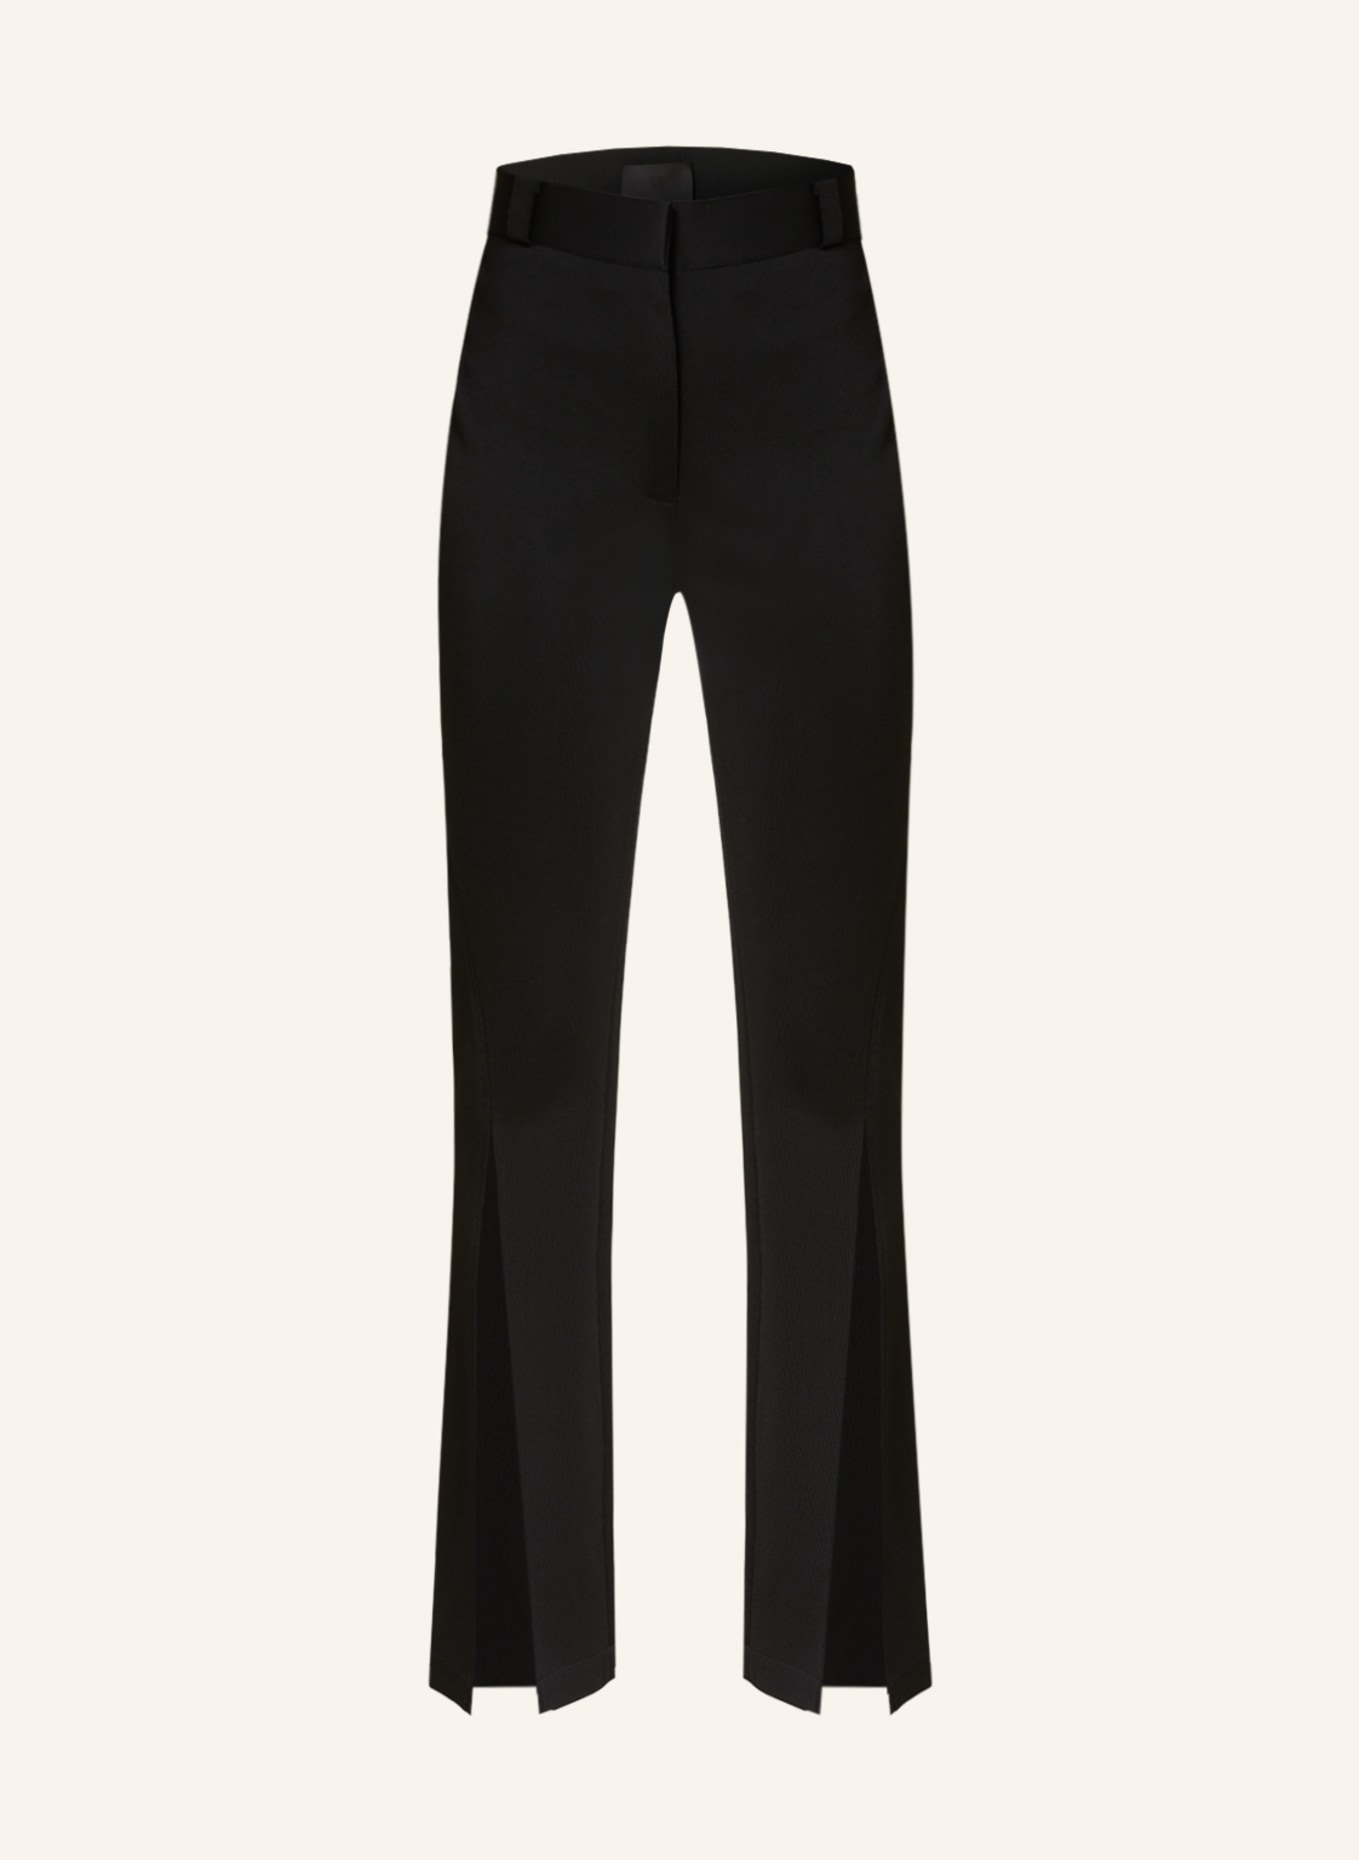 Givenchy Trousers | luxlet.com